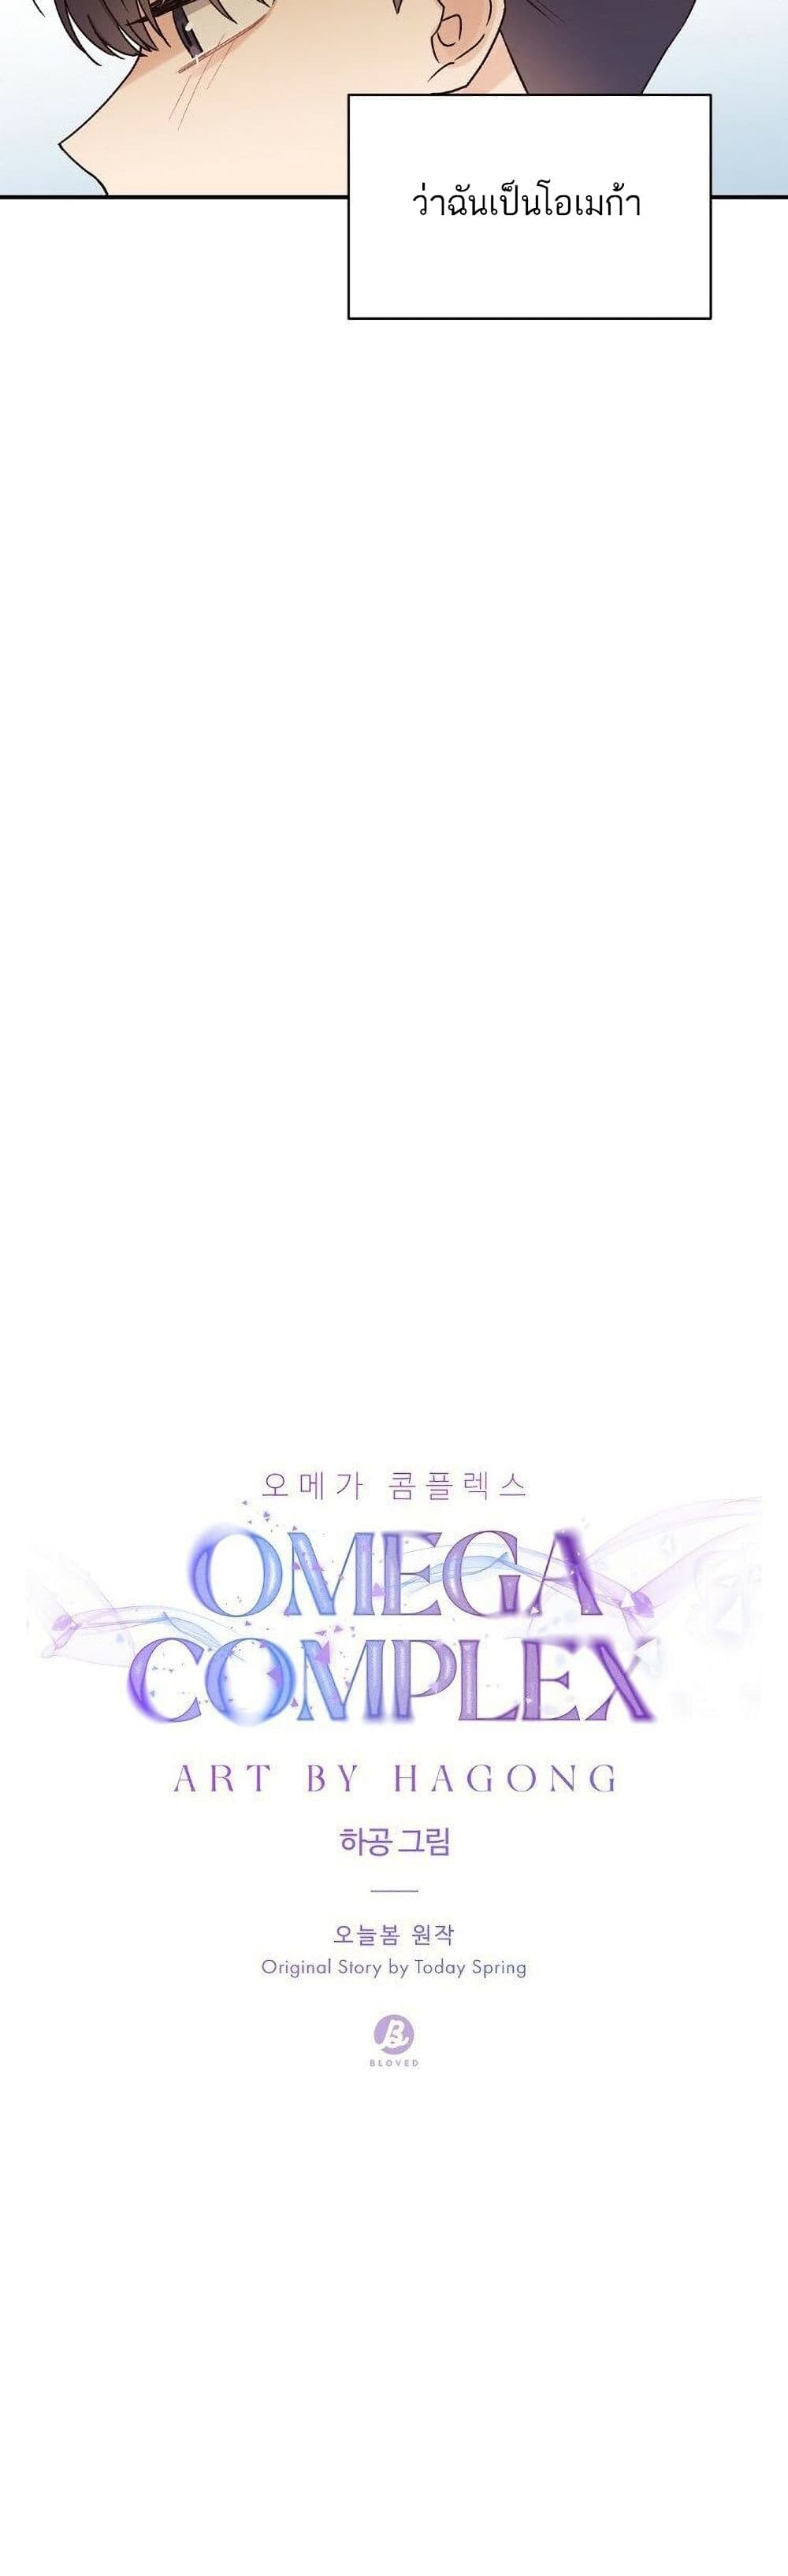 Omega Complex 8 07